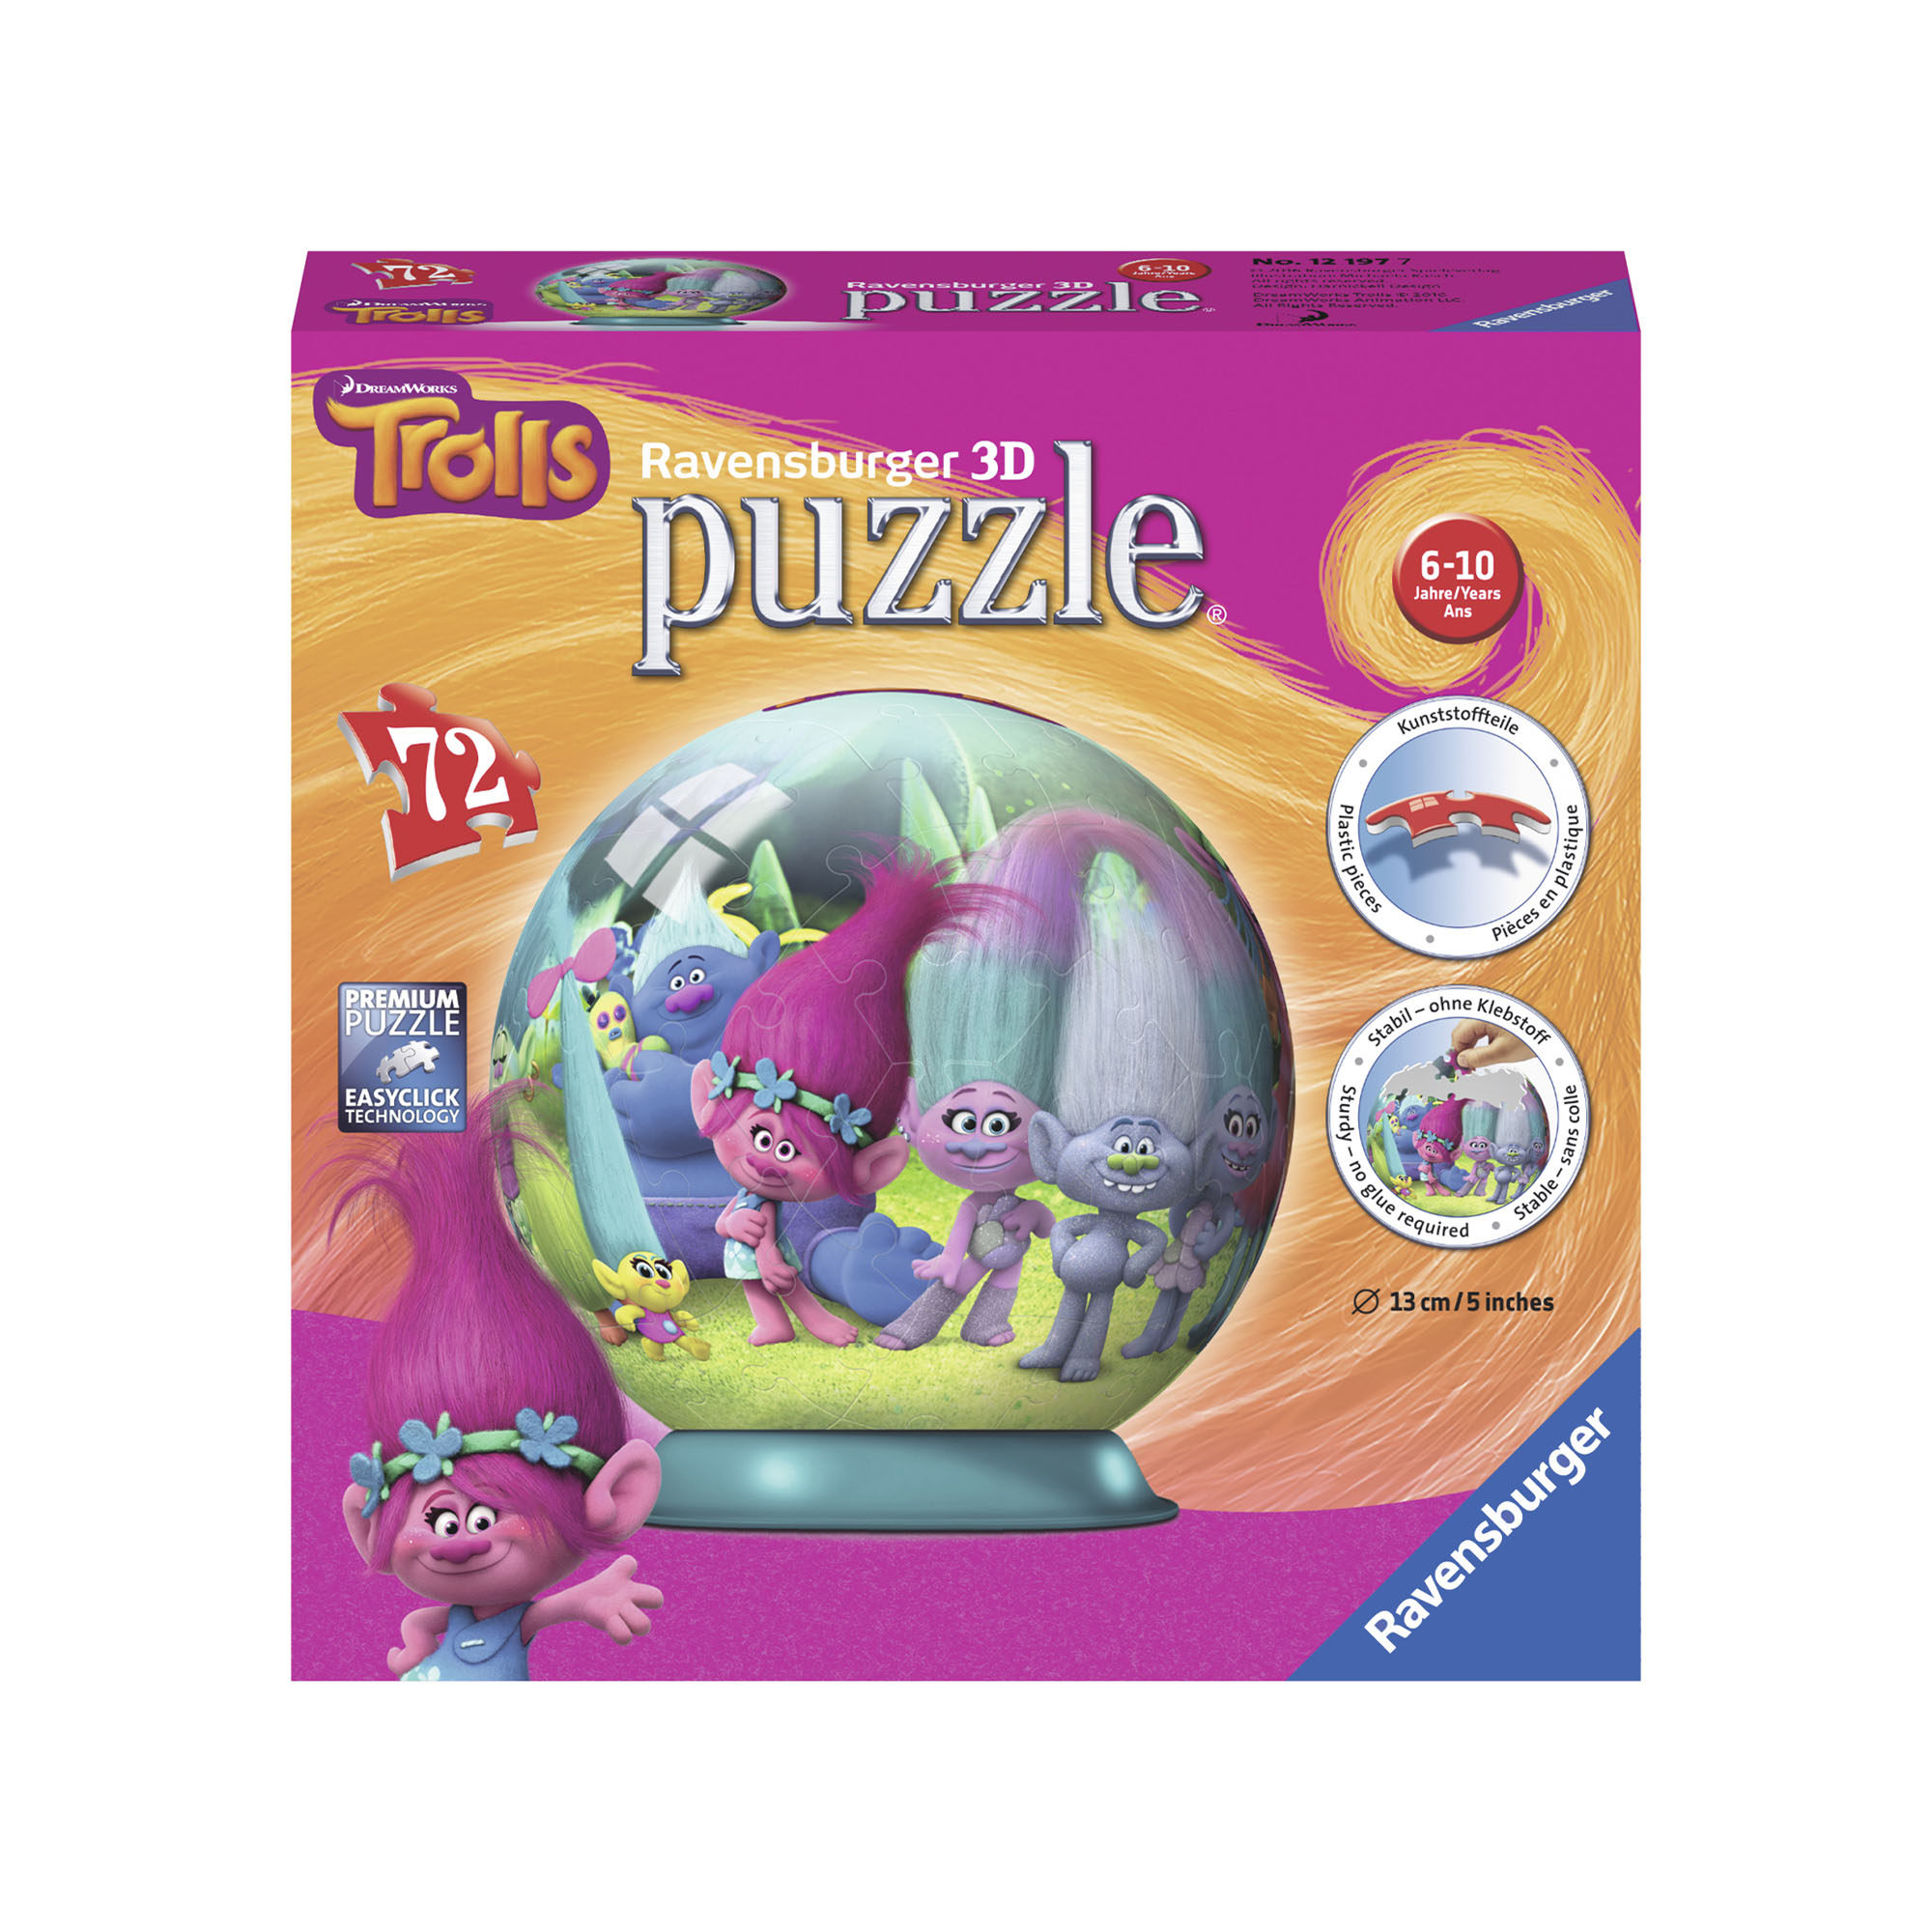 Ravensburger 3d Puzzleball 12197 - Trolls, , large